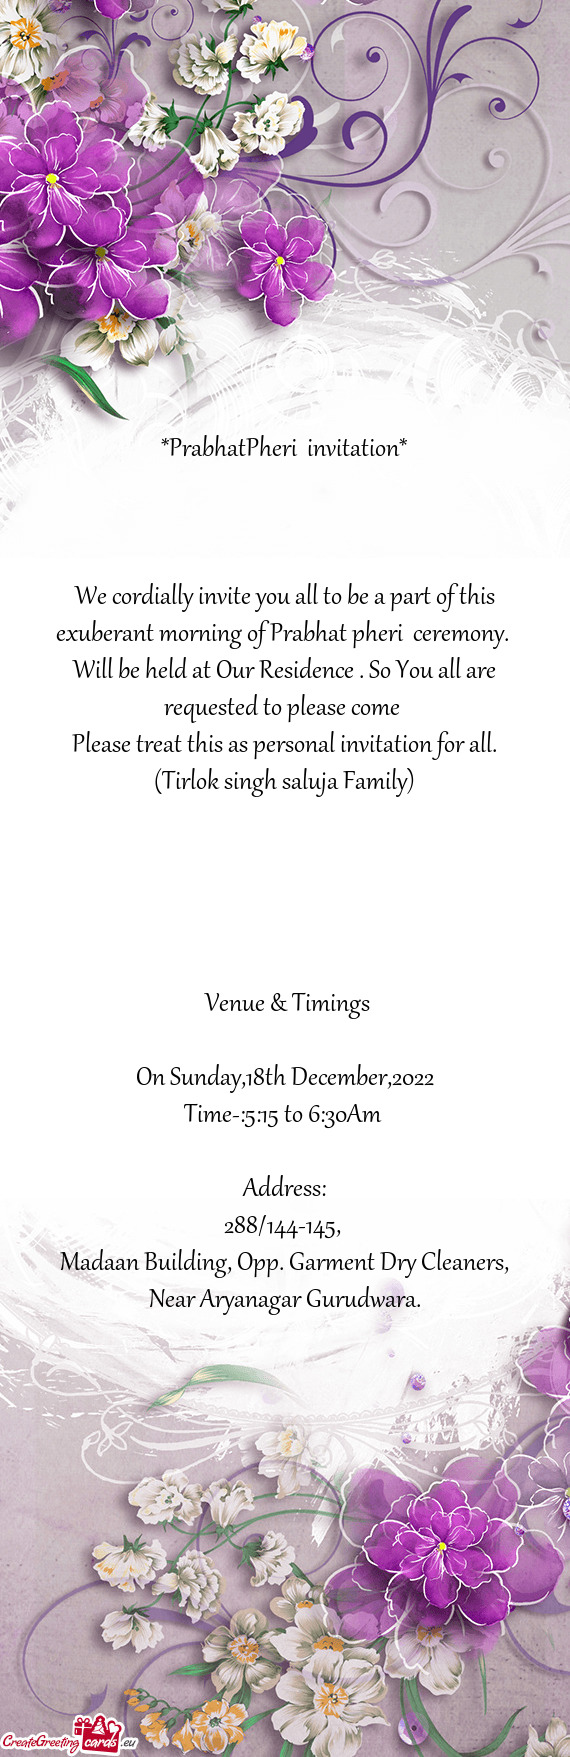 PrabhatPheri invitation